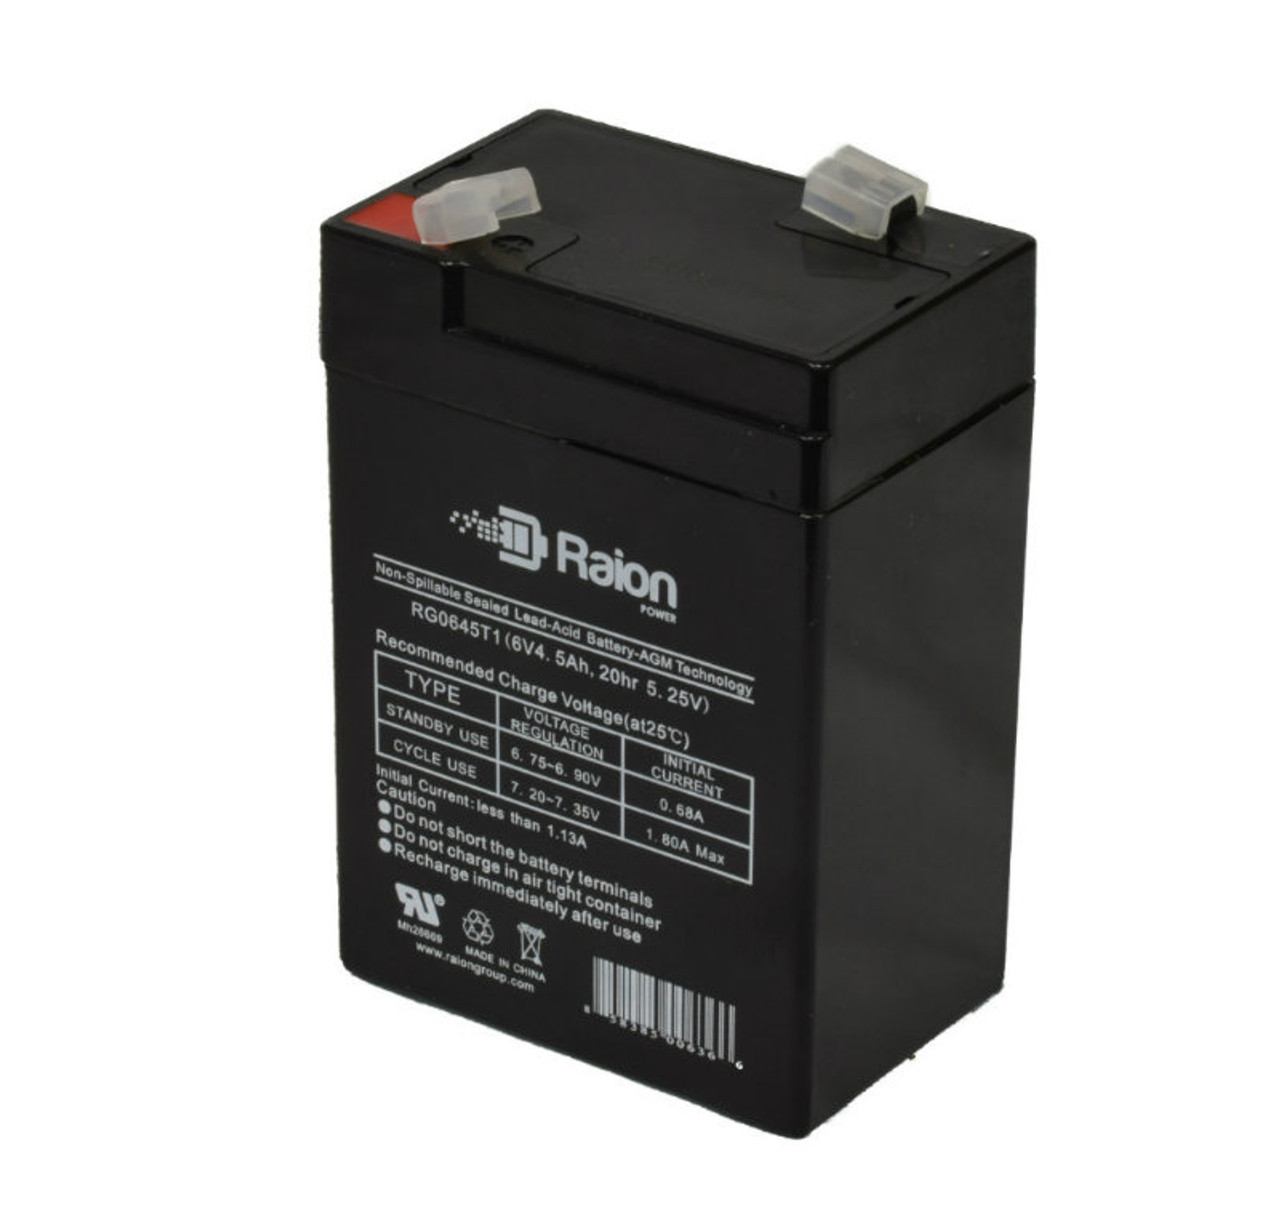 Raion Power RG0645T1 6V 4.5Ah Replacement Battery Cartridge for Sonnenschein 6V4.6